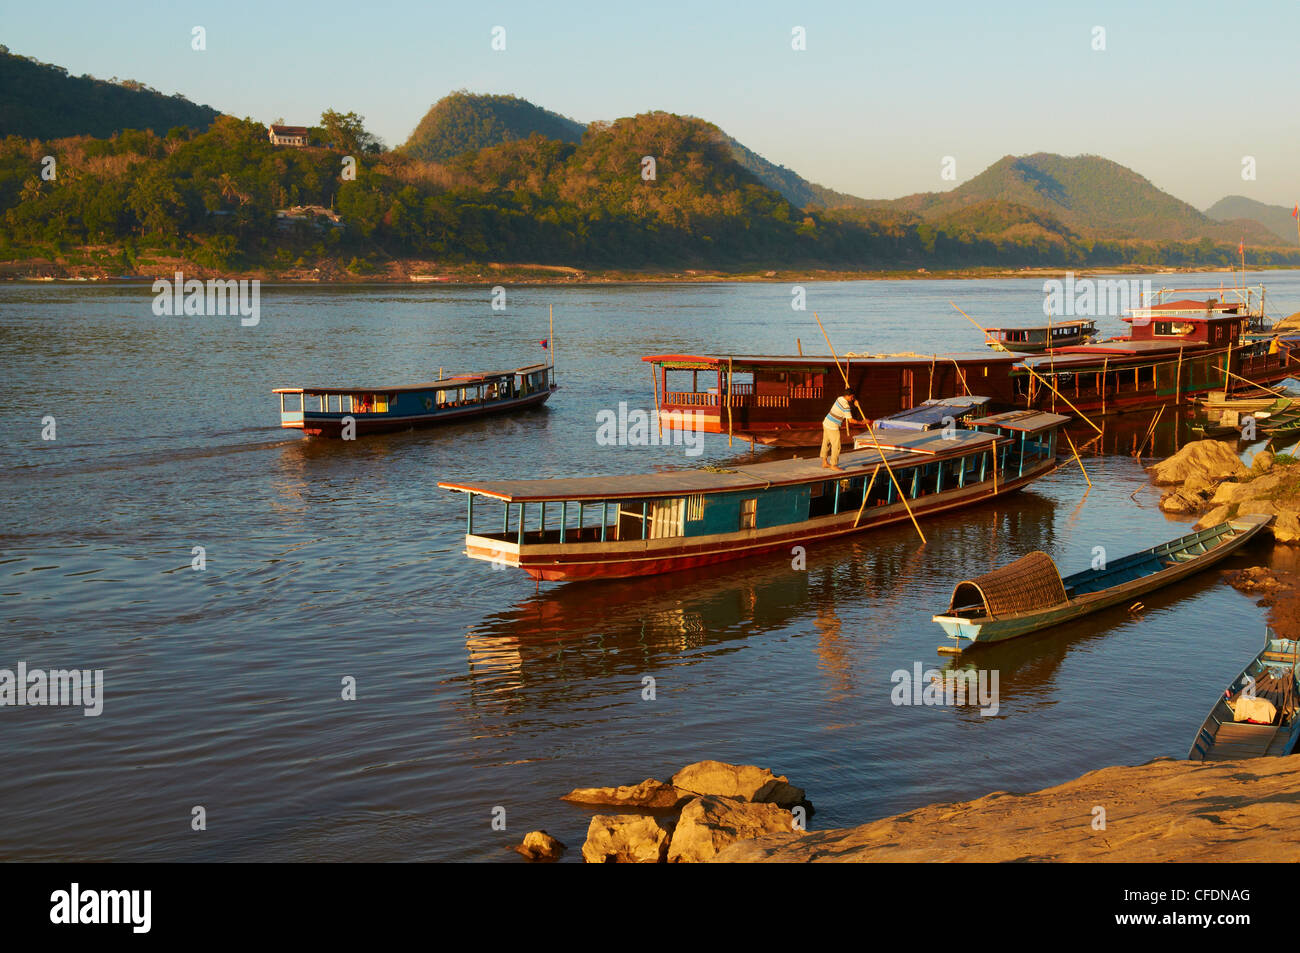 Le imbarcazioni turistiche al tramonto sul fiume Mekong, Luang Prabang, Laos, Indocina, Asia sud-orientale, Asia Foto Stock